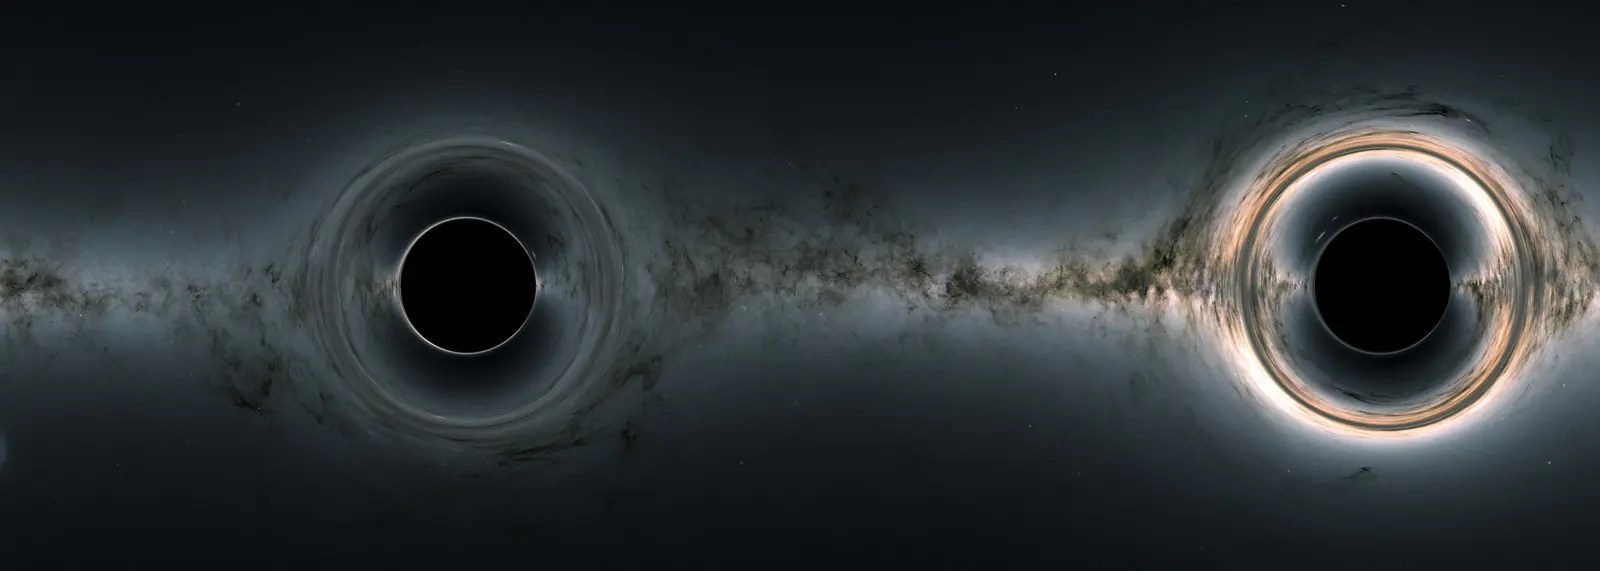 black hole paper presentation